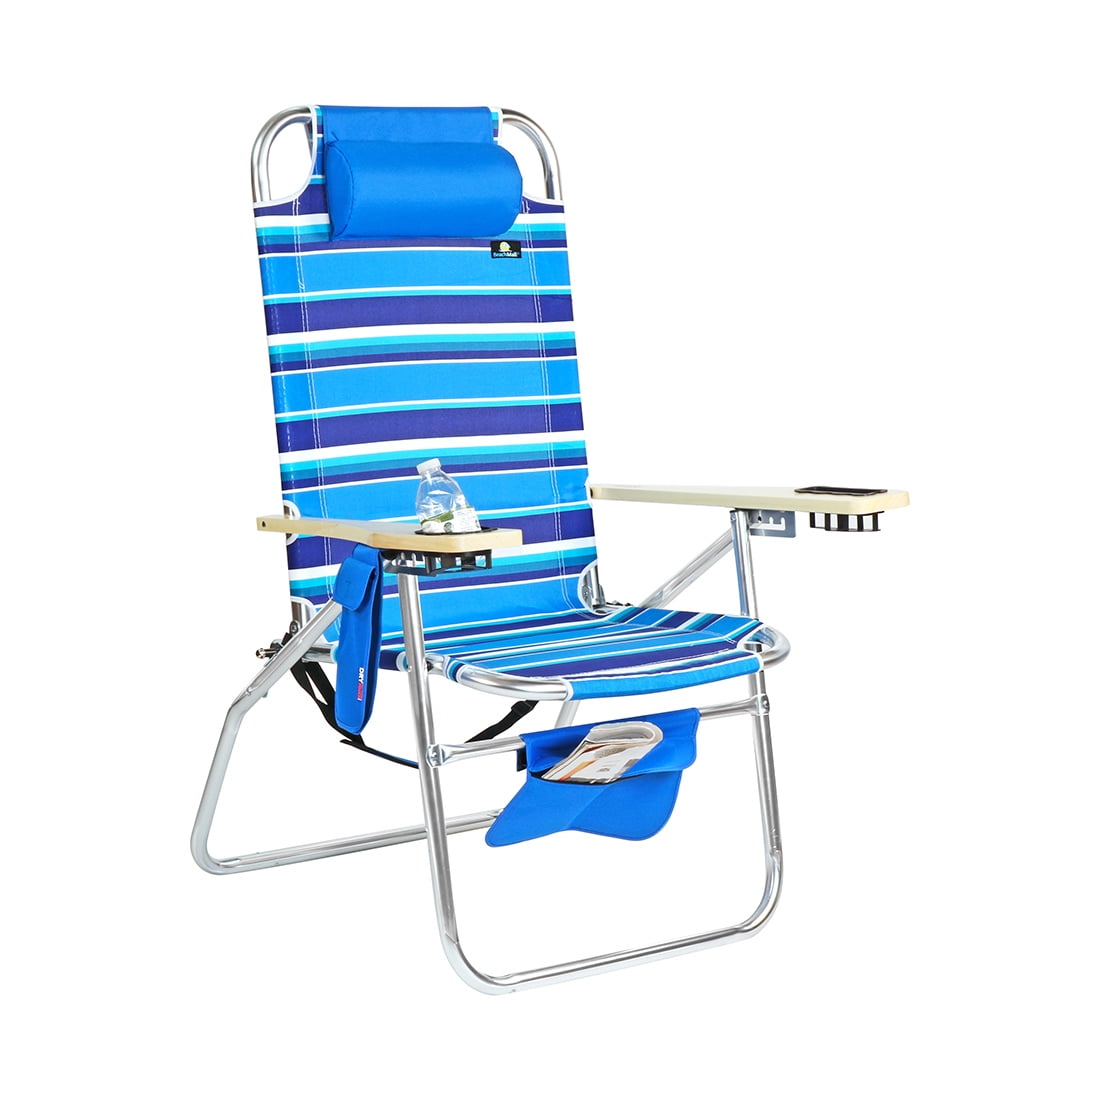 Modern Beach Chair Seat Height for Simple Design